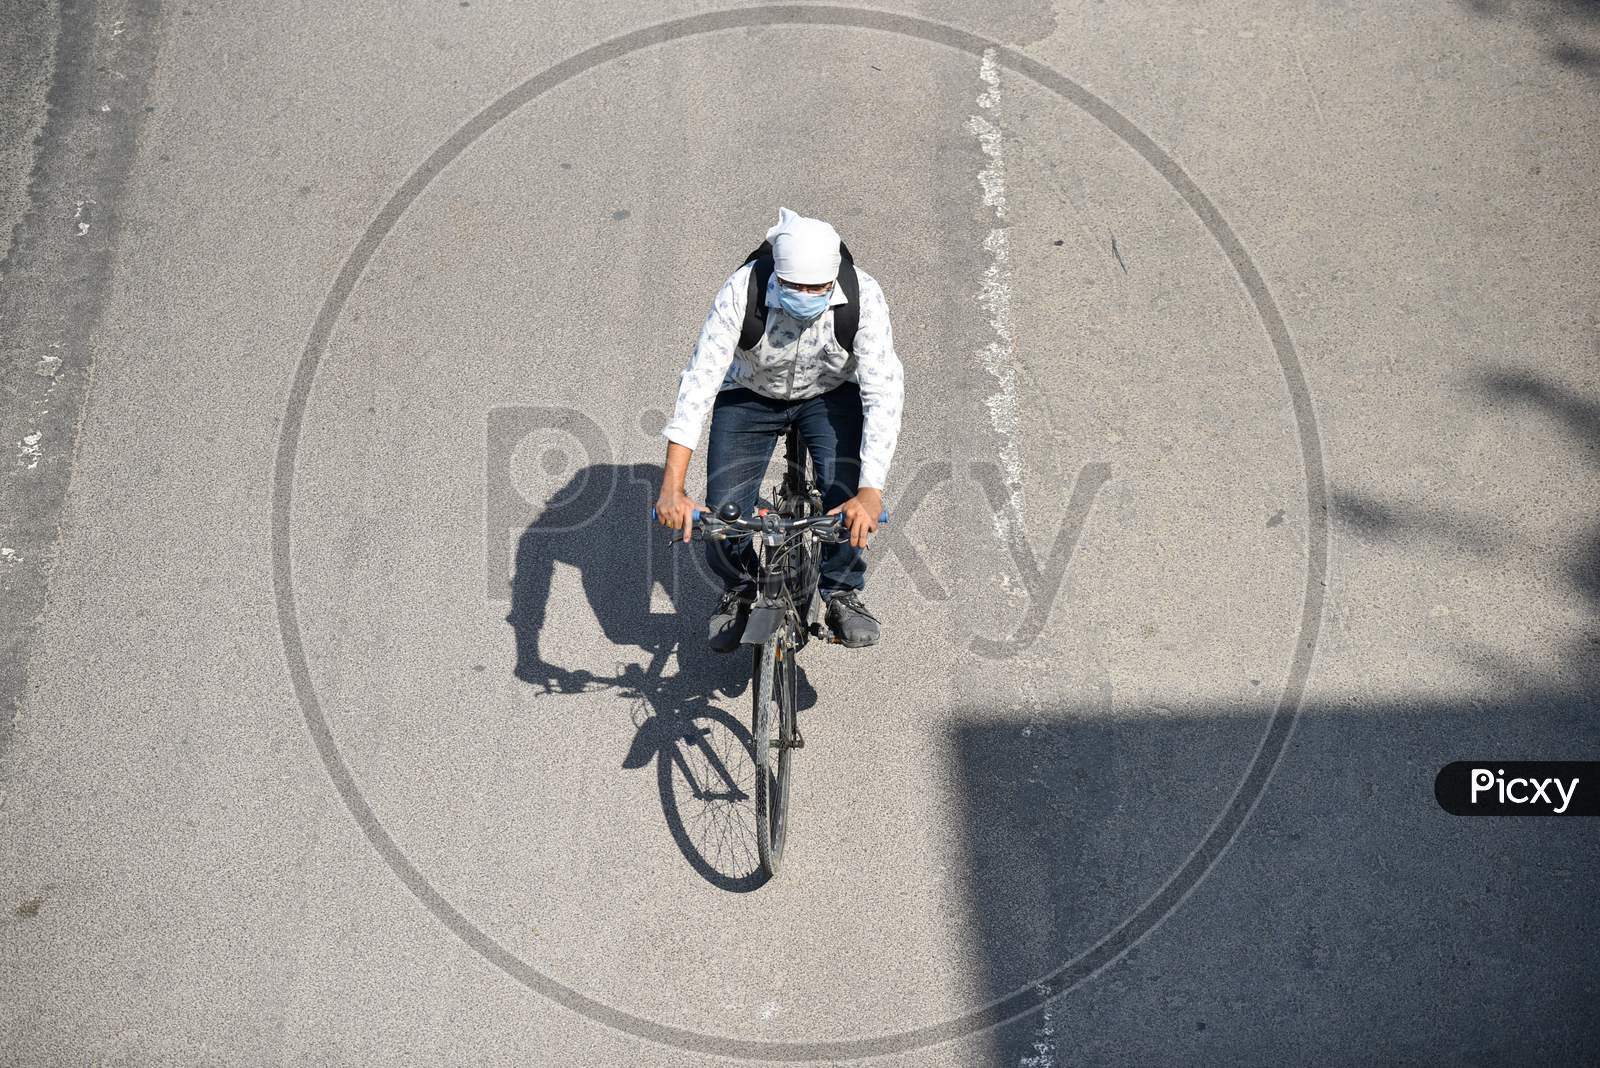 A bike rider seen wearing Face Mask amid Corona Virus outbreak in Hyderabad